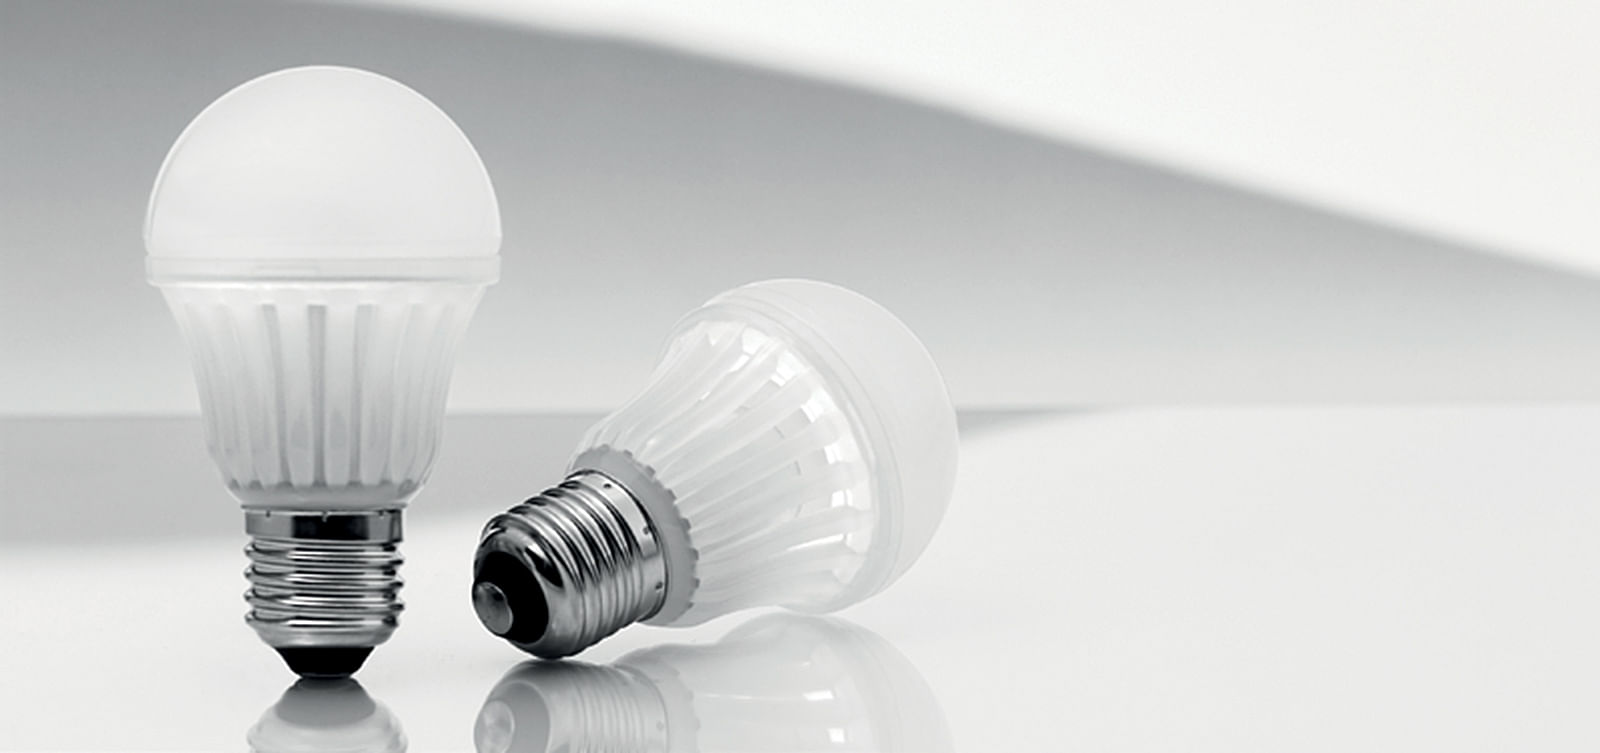 Led bulbs 130 million saving.